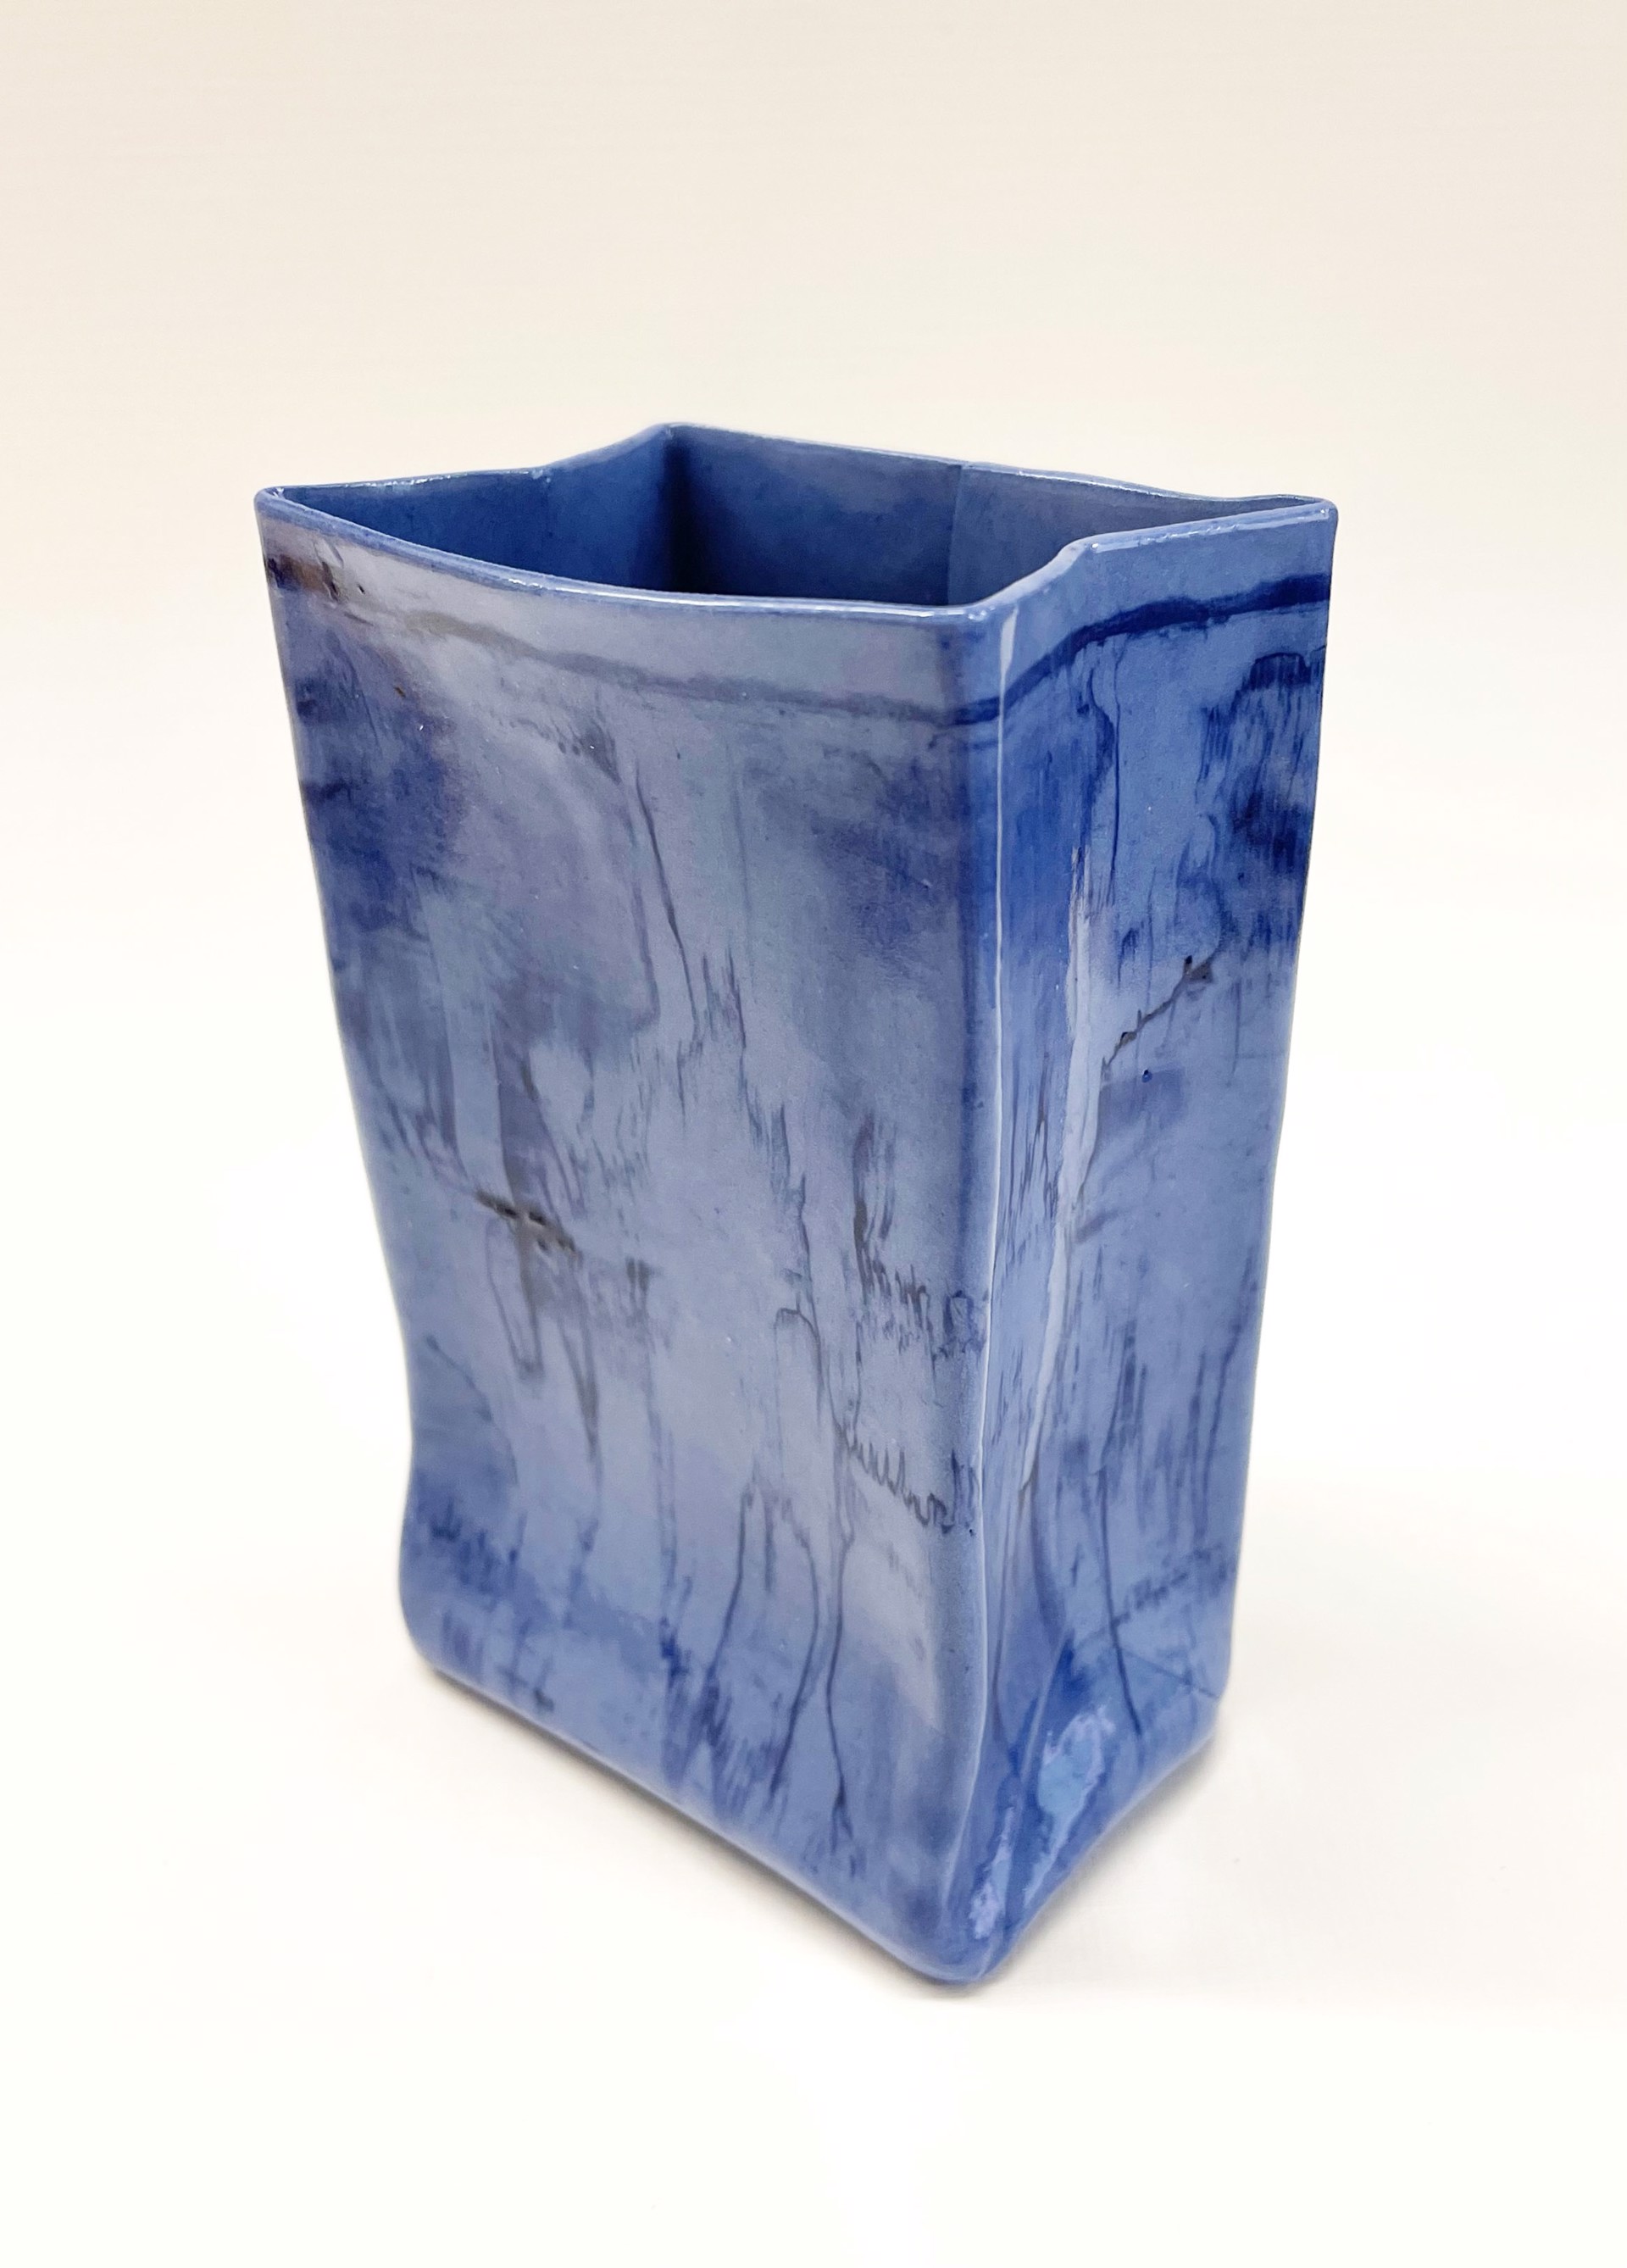 Blue Porcelain Bag by Chandra Beadleston